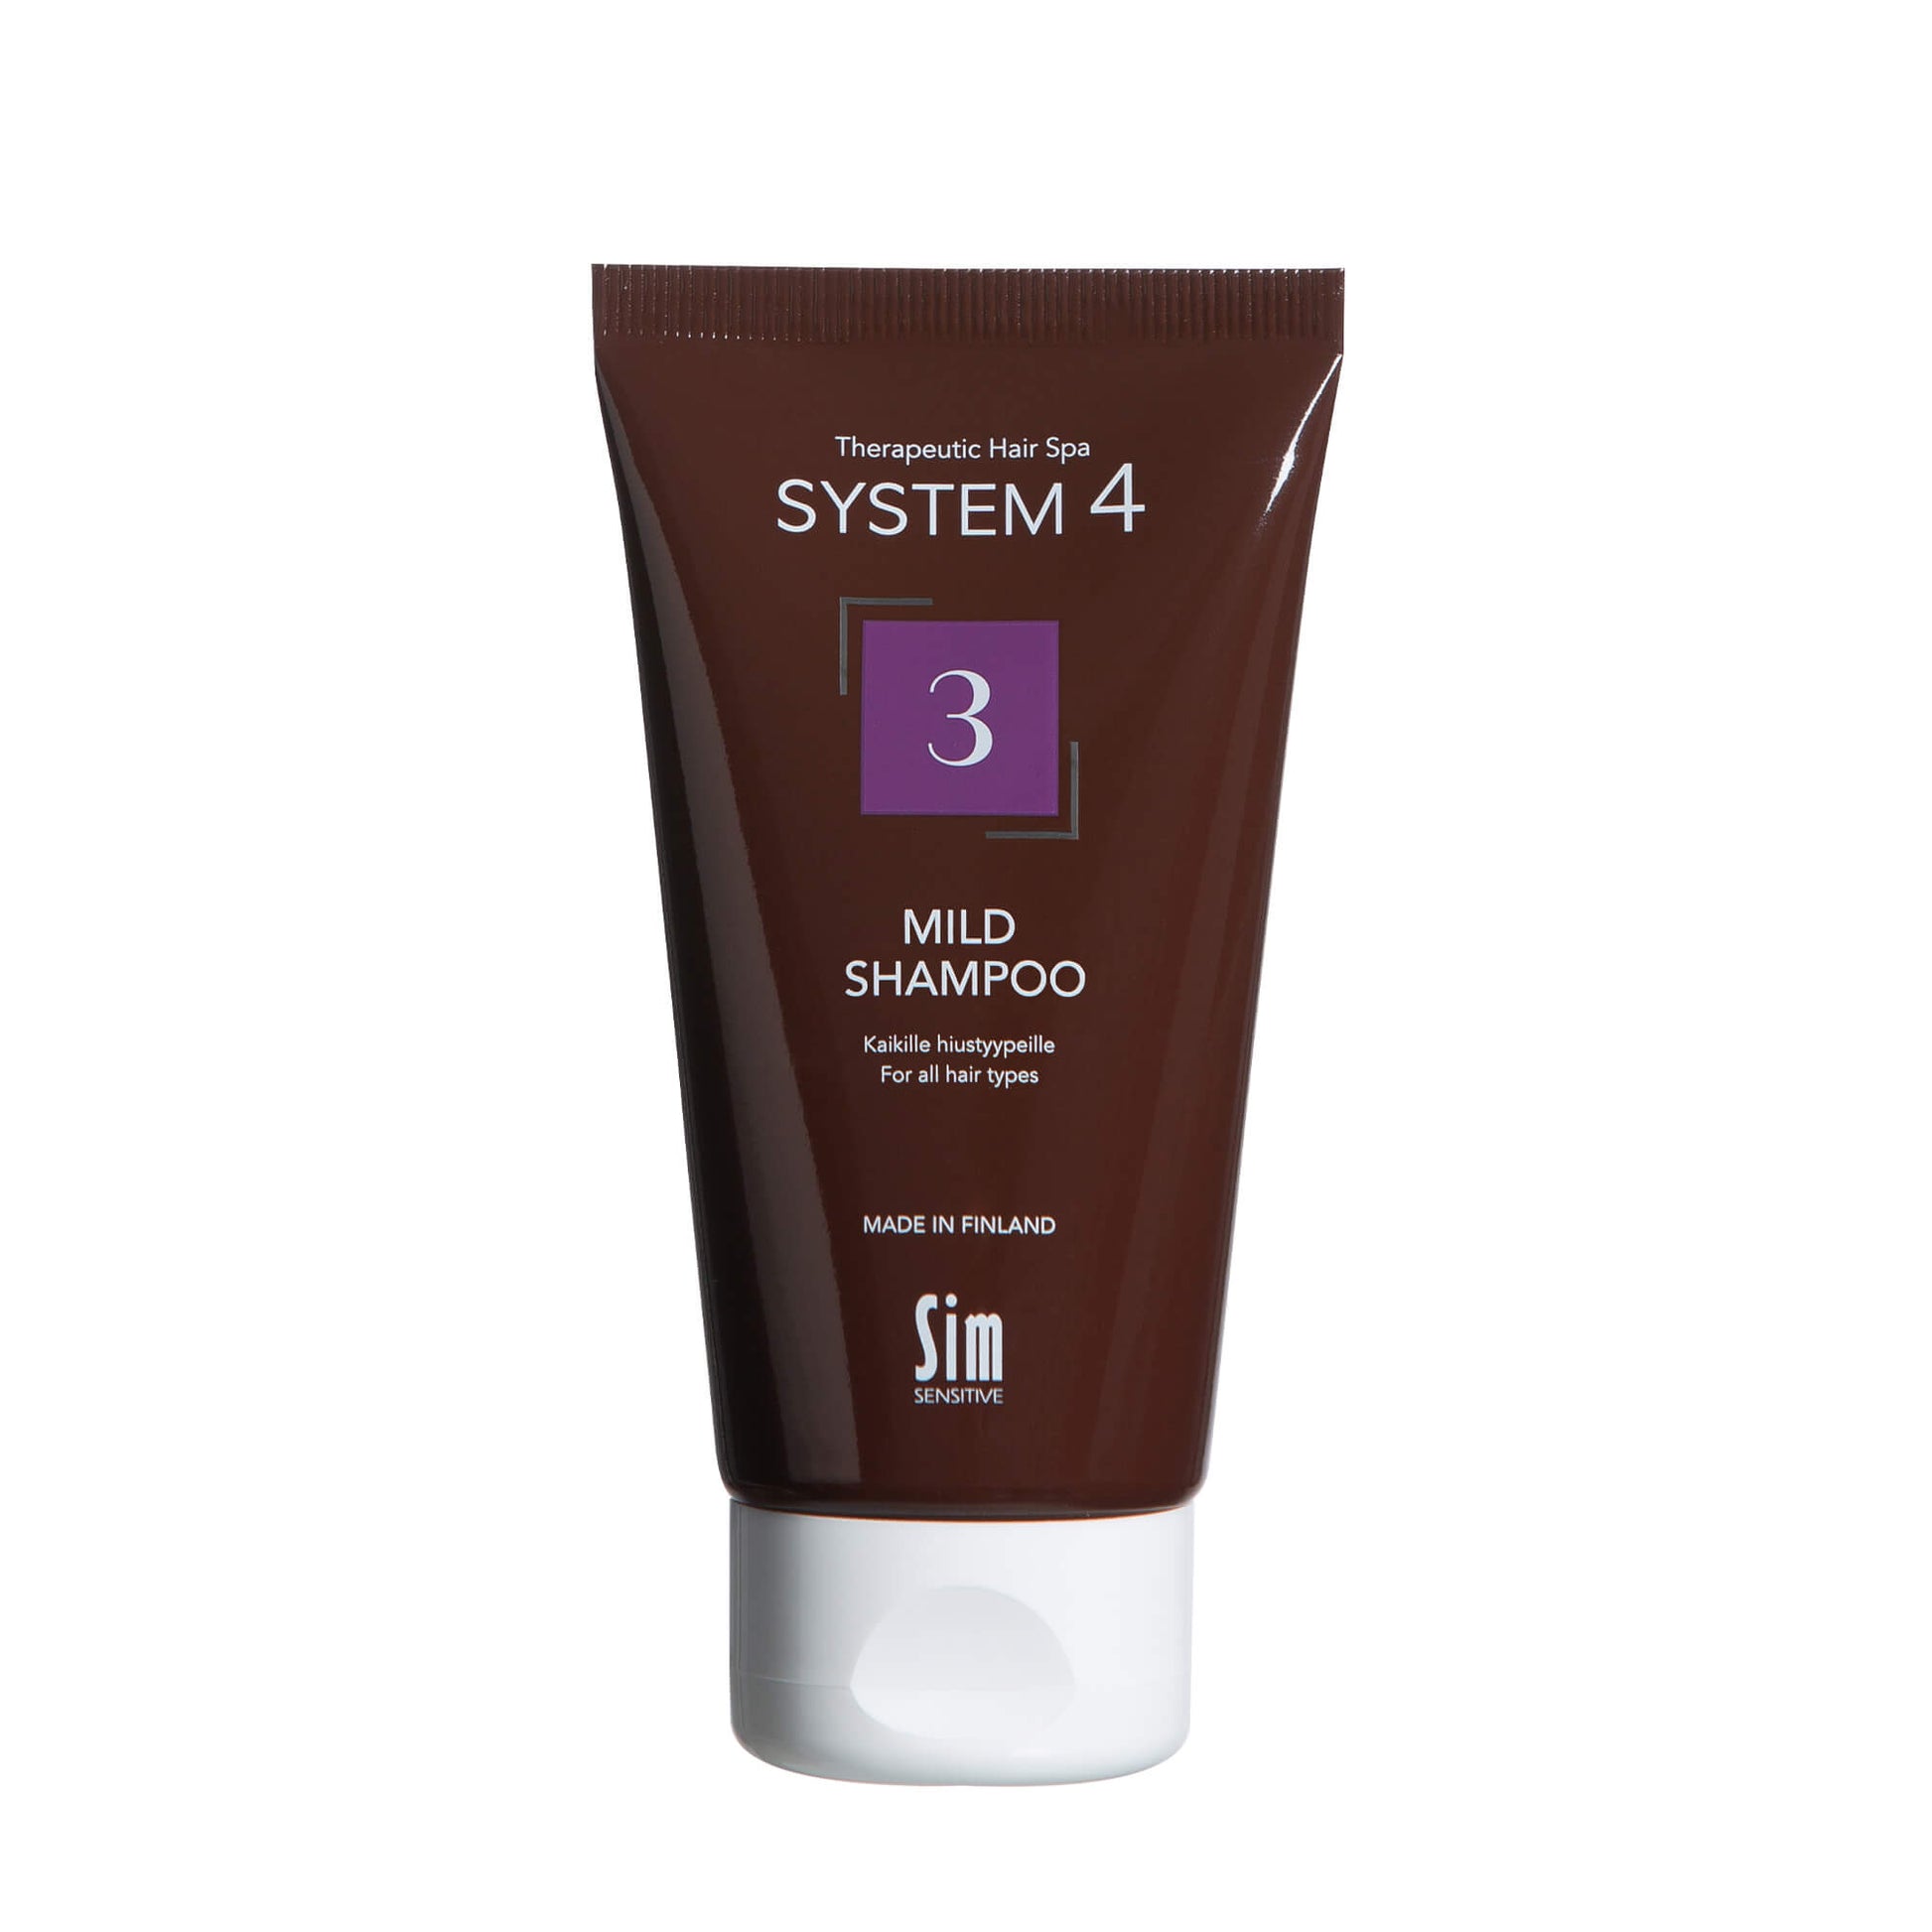 SYSTEM 4 Mild Shampoo 3 kaikille hiustyypeille 75 ml